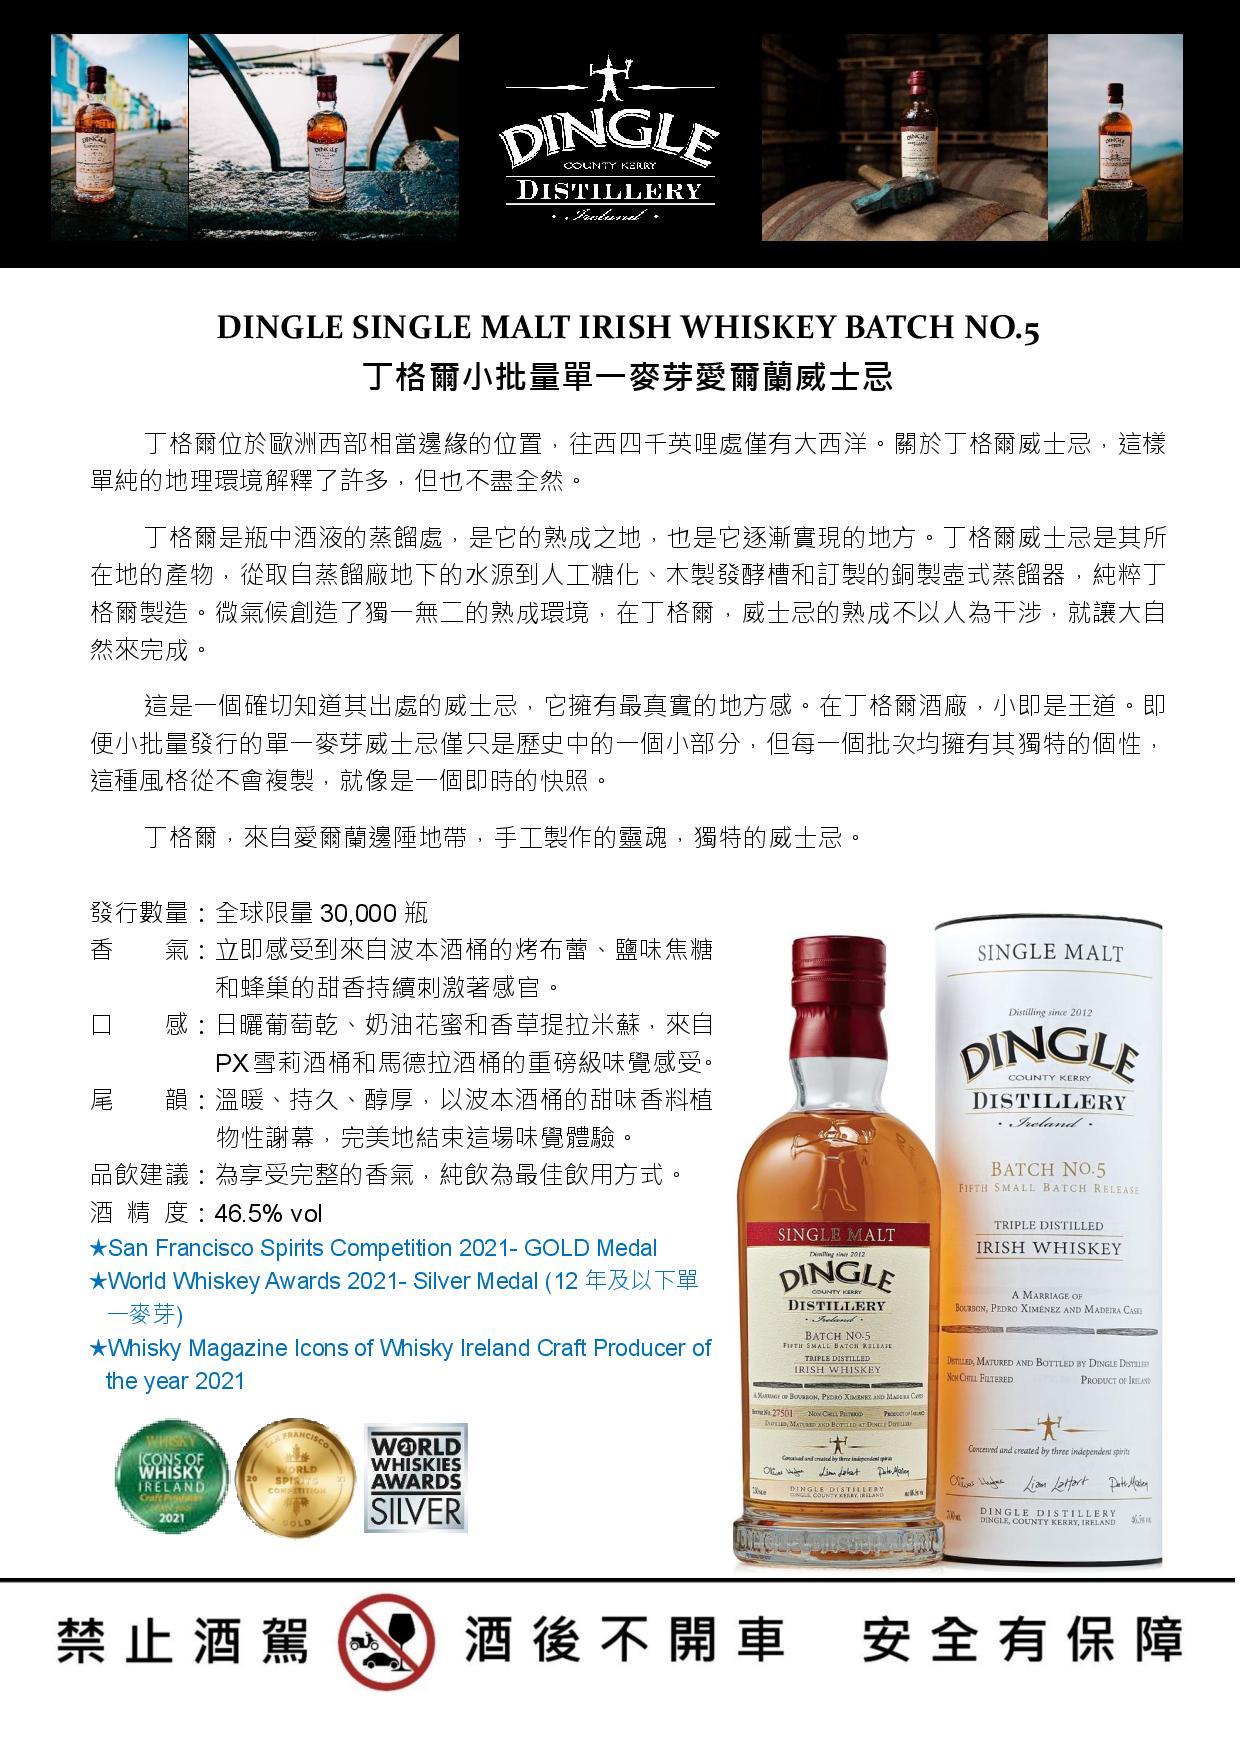 DD201 Dingle Single Malt Irish Whiskey no.5丁格爾小批量單一麥芽愛爾蘭威士忌